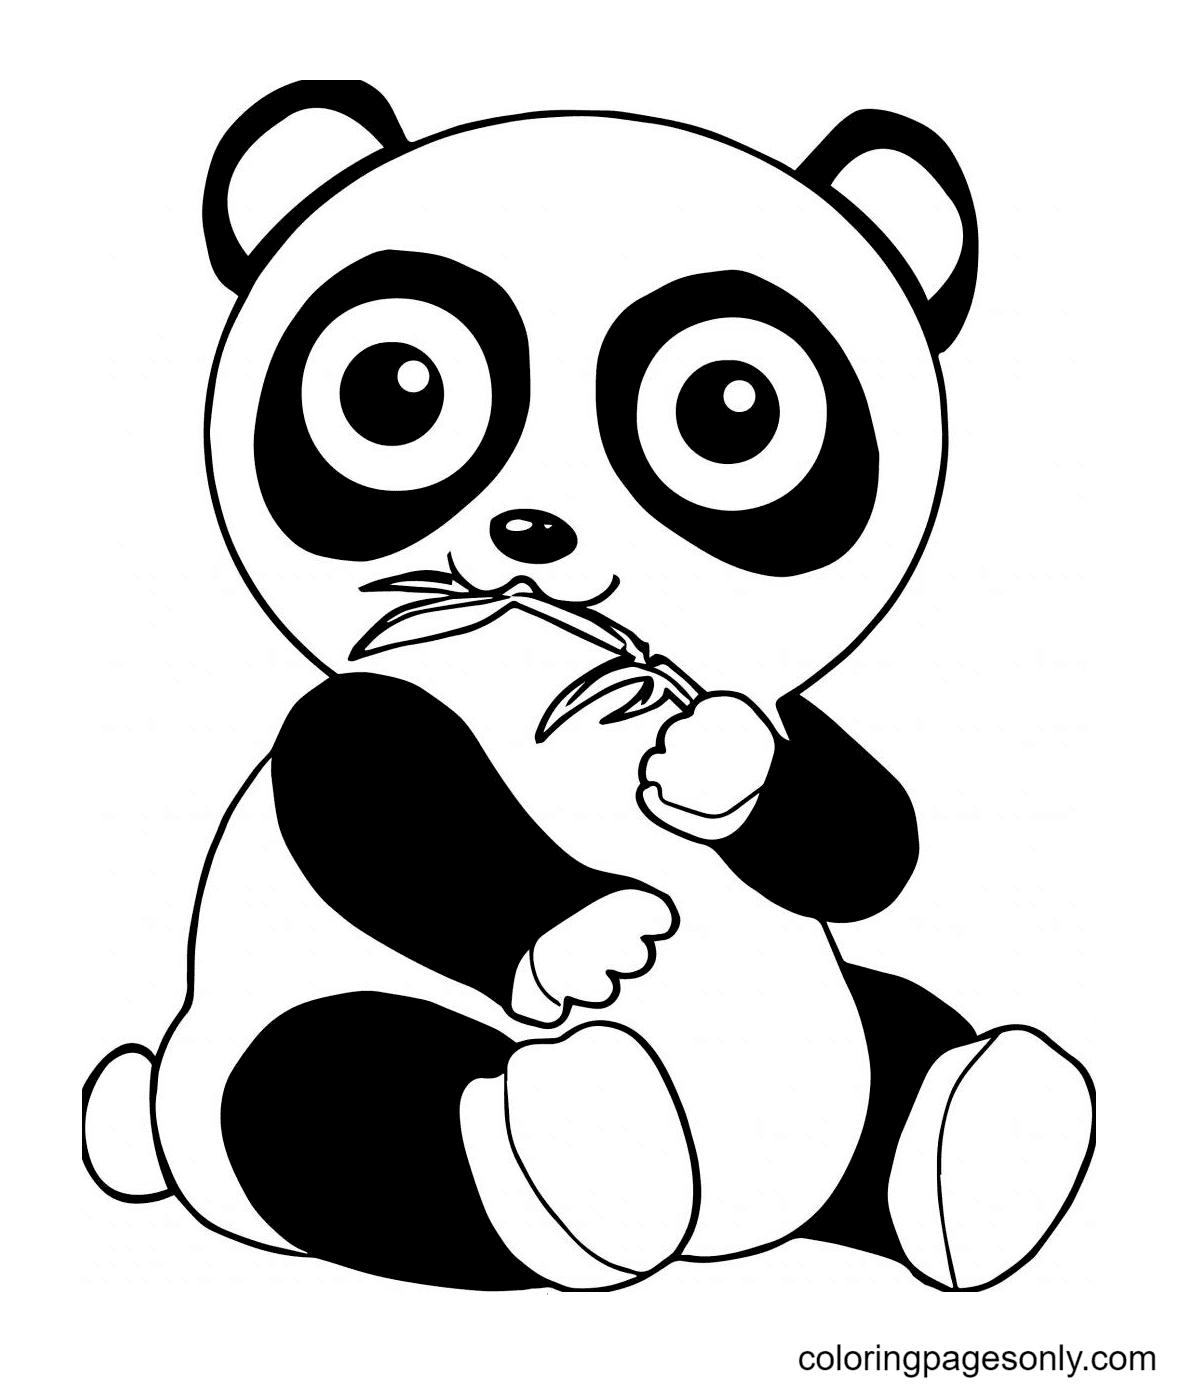 Cute Panda Coloring Page